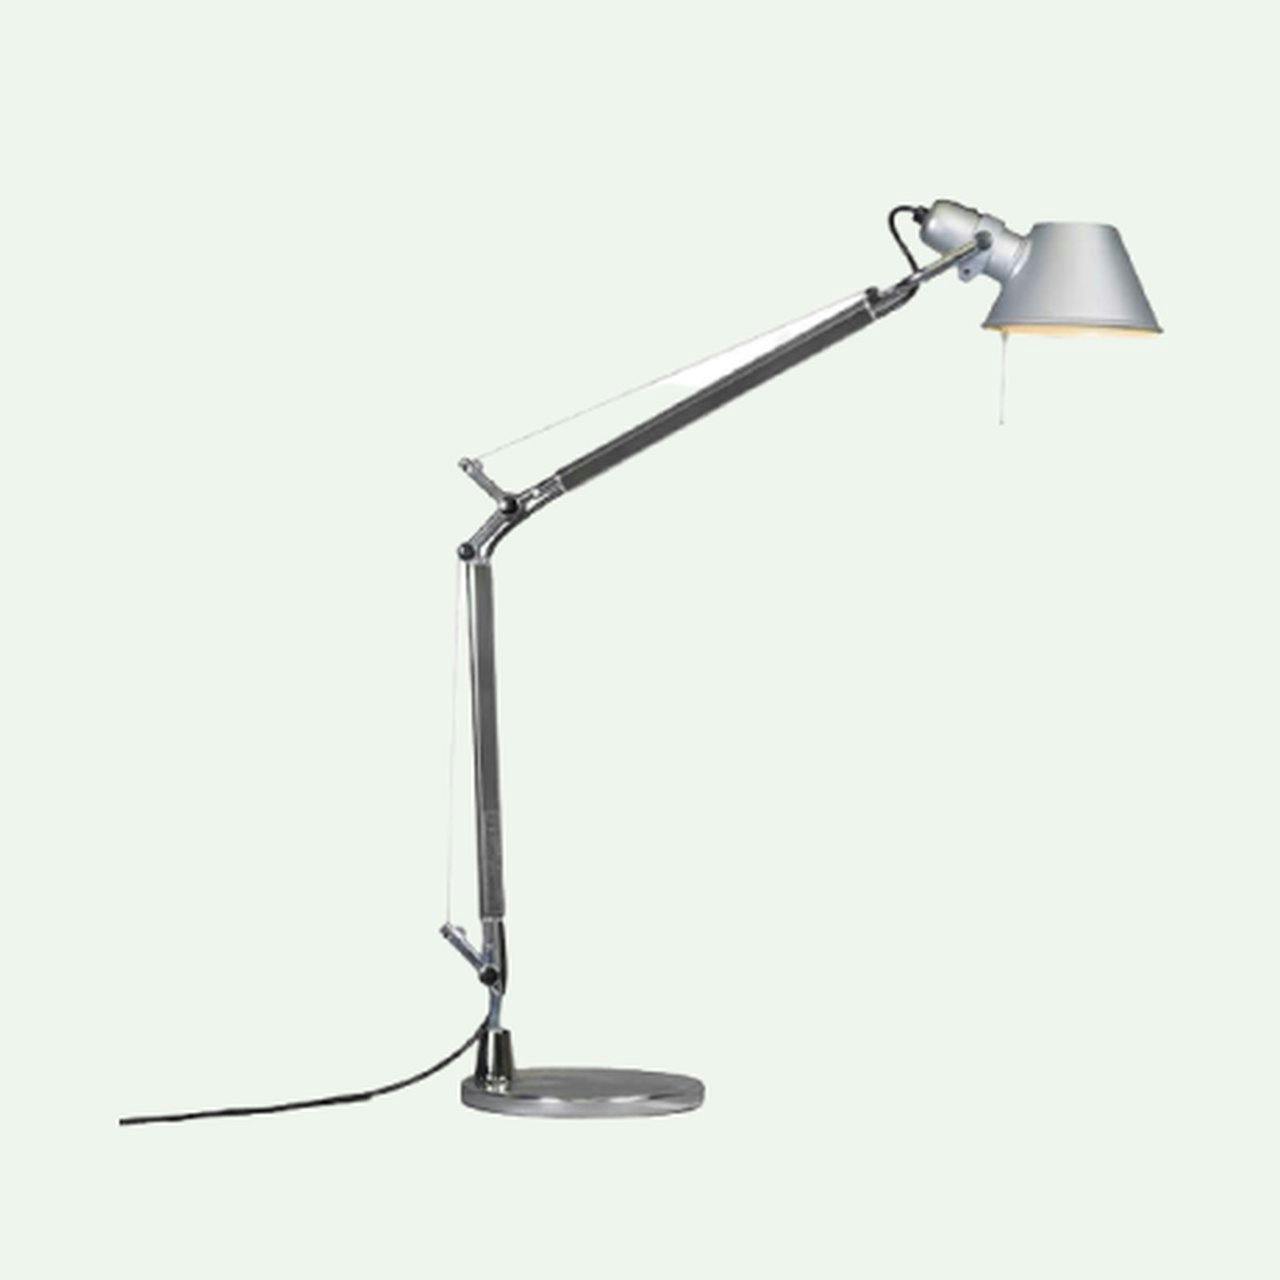 Italian Design Desk lamps